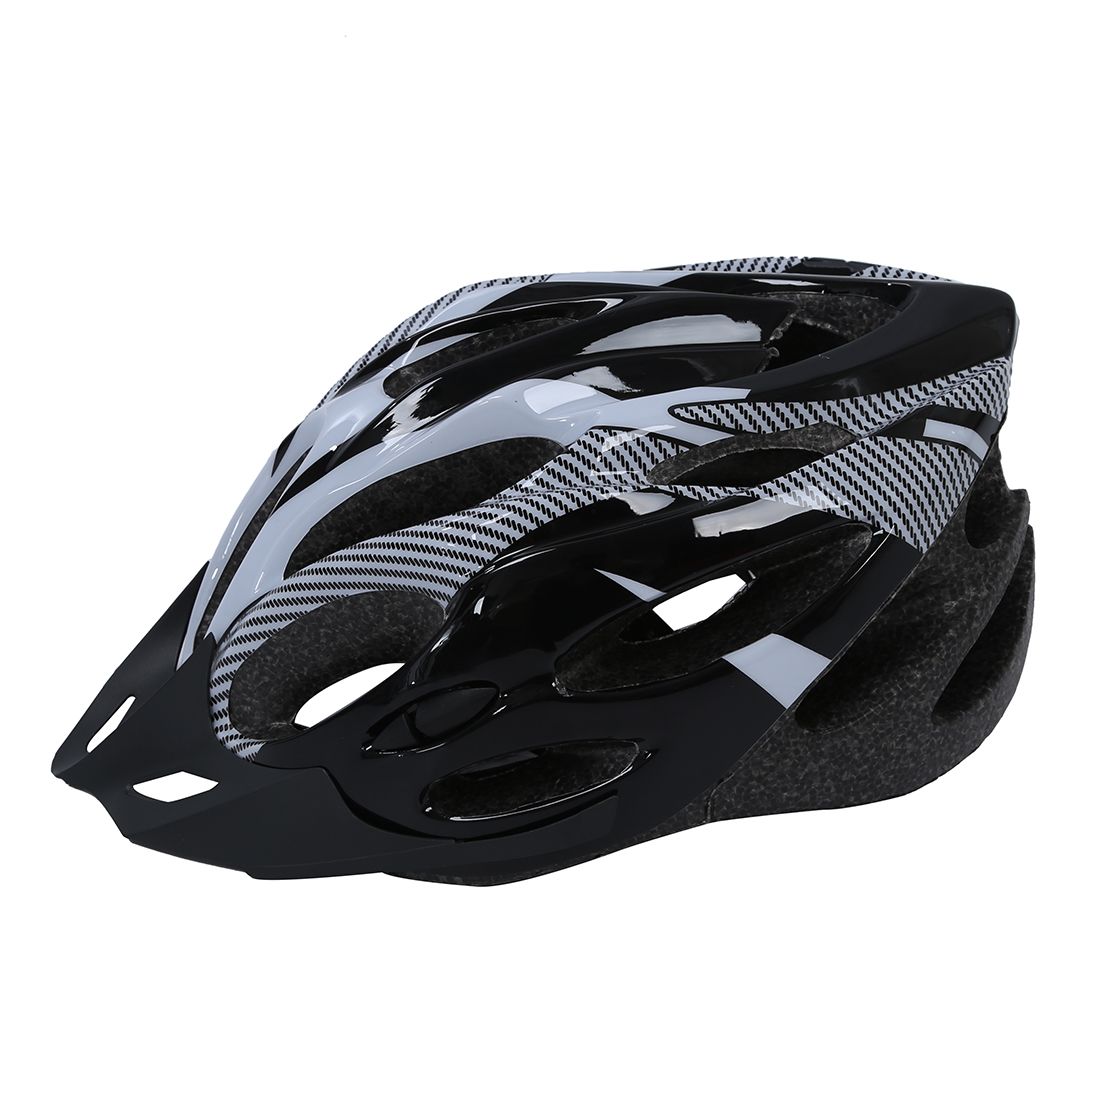 Details about   Negro gris del casco de ciclista de montana Bike el casco para Hombres R6F7